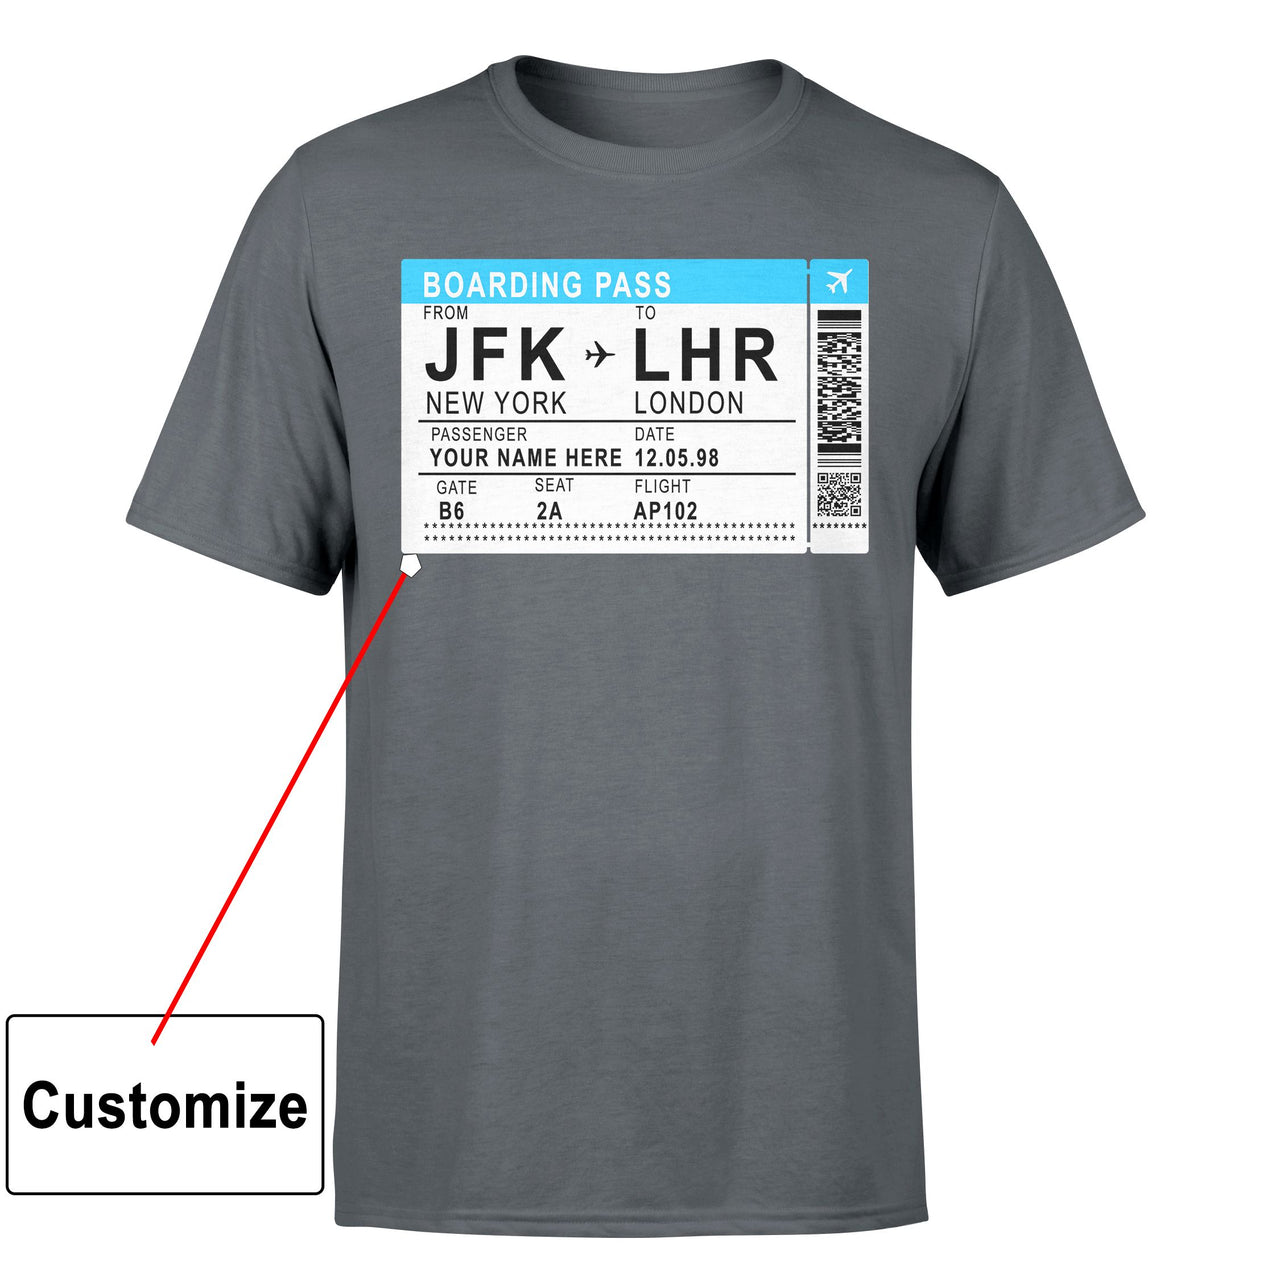 Customizable BOARDING PASS TICKET Designed T-Shirts